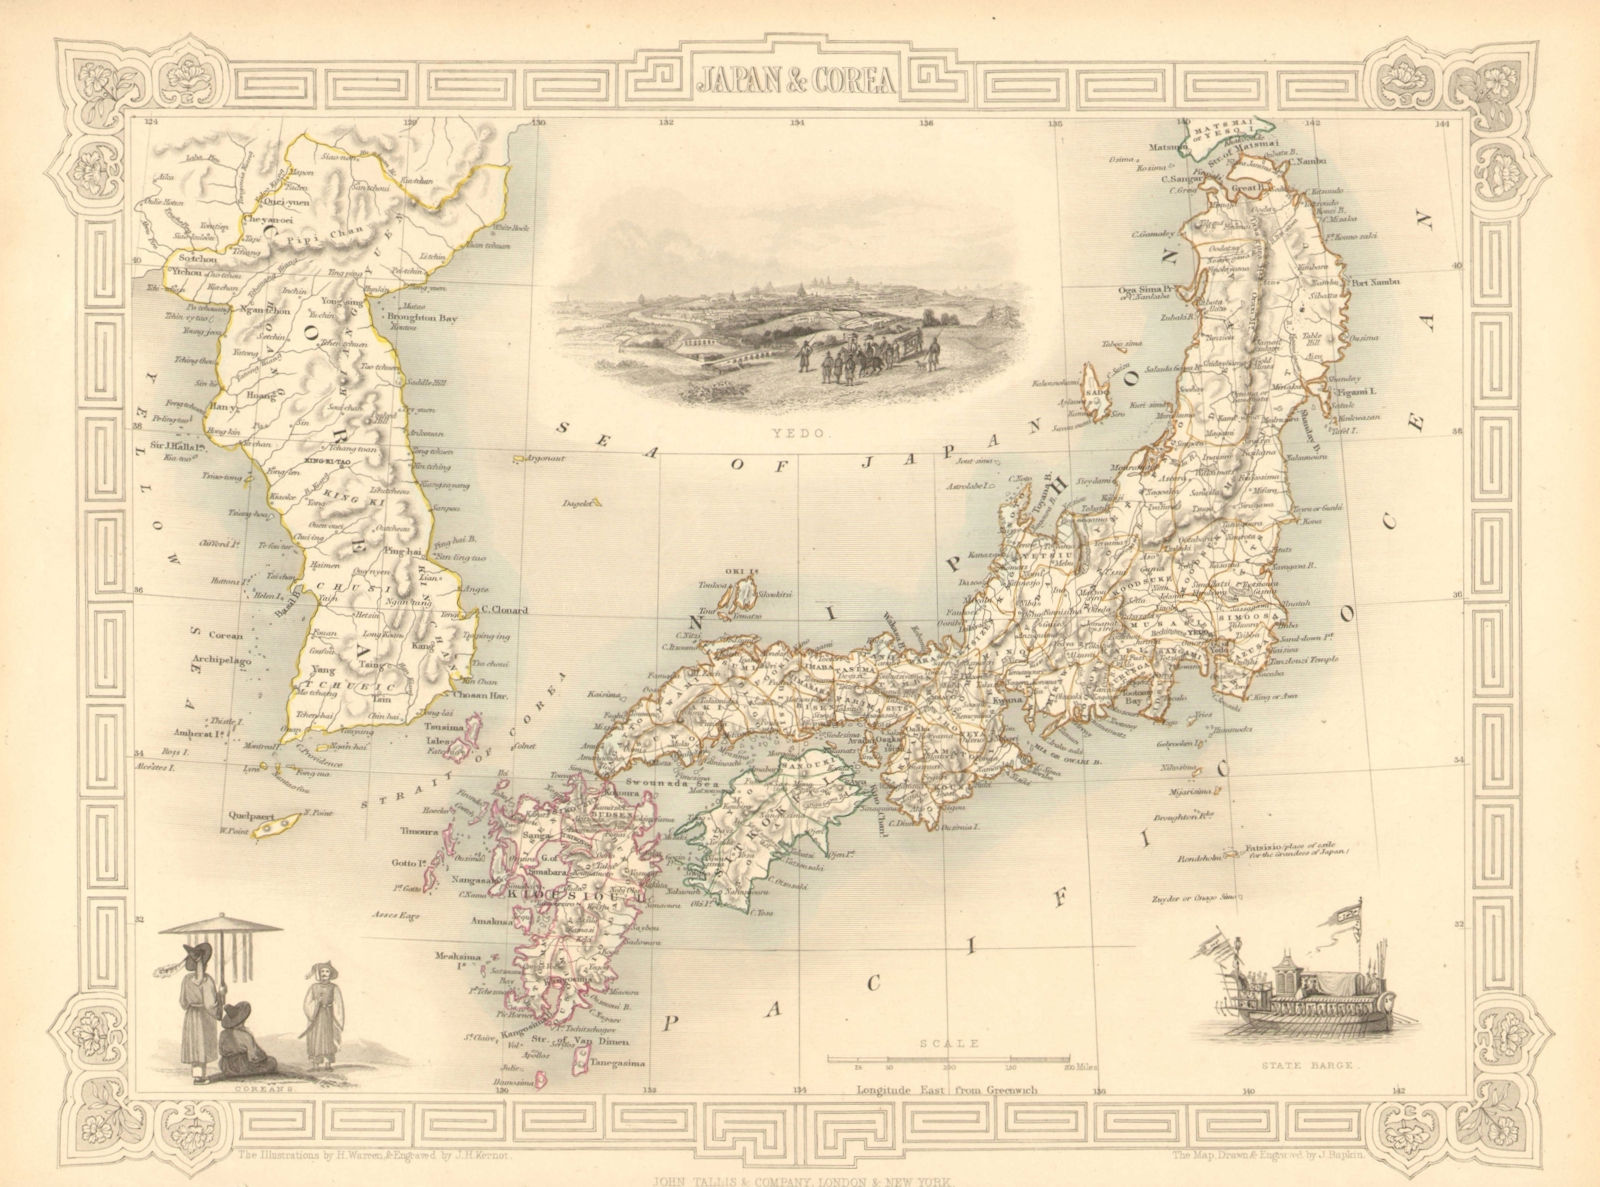 'JAPAN & COREA'. Yedo (Tokyo) King-ki-Tao (Seoul). Korea.TALLIS/RAPKIN 1851 map